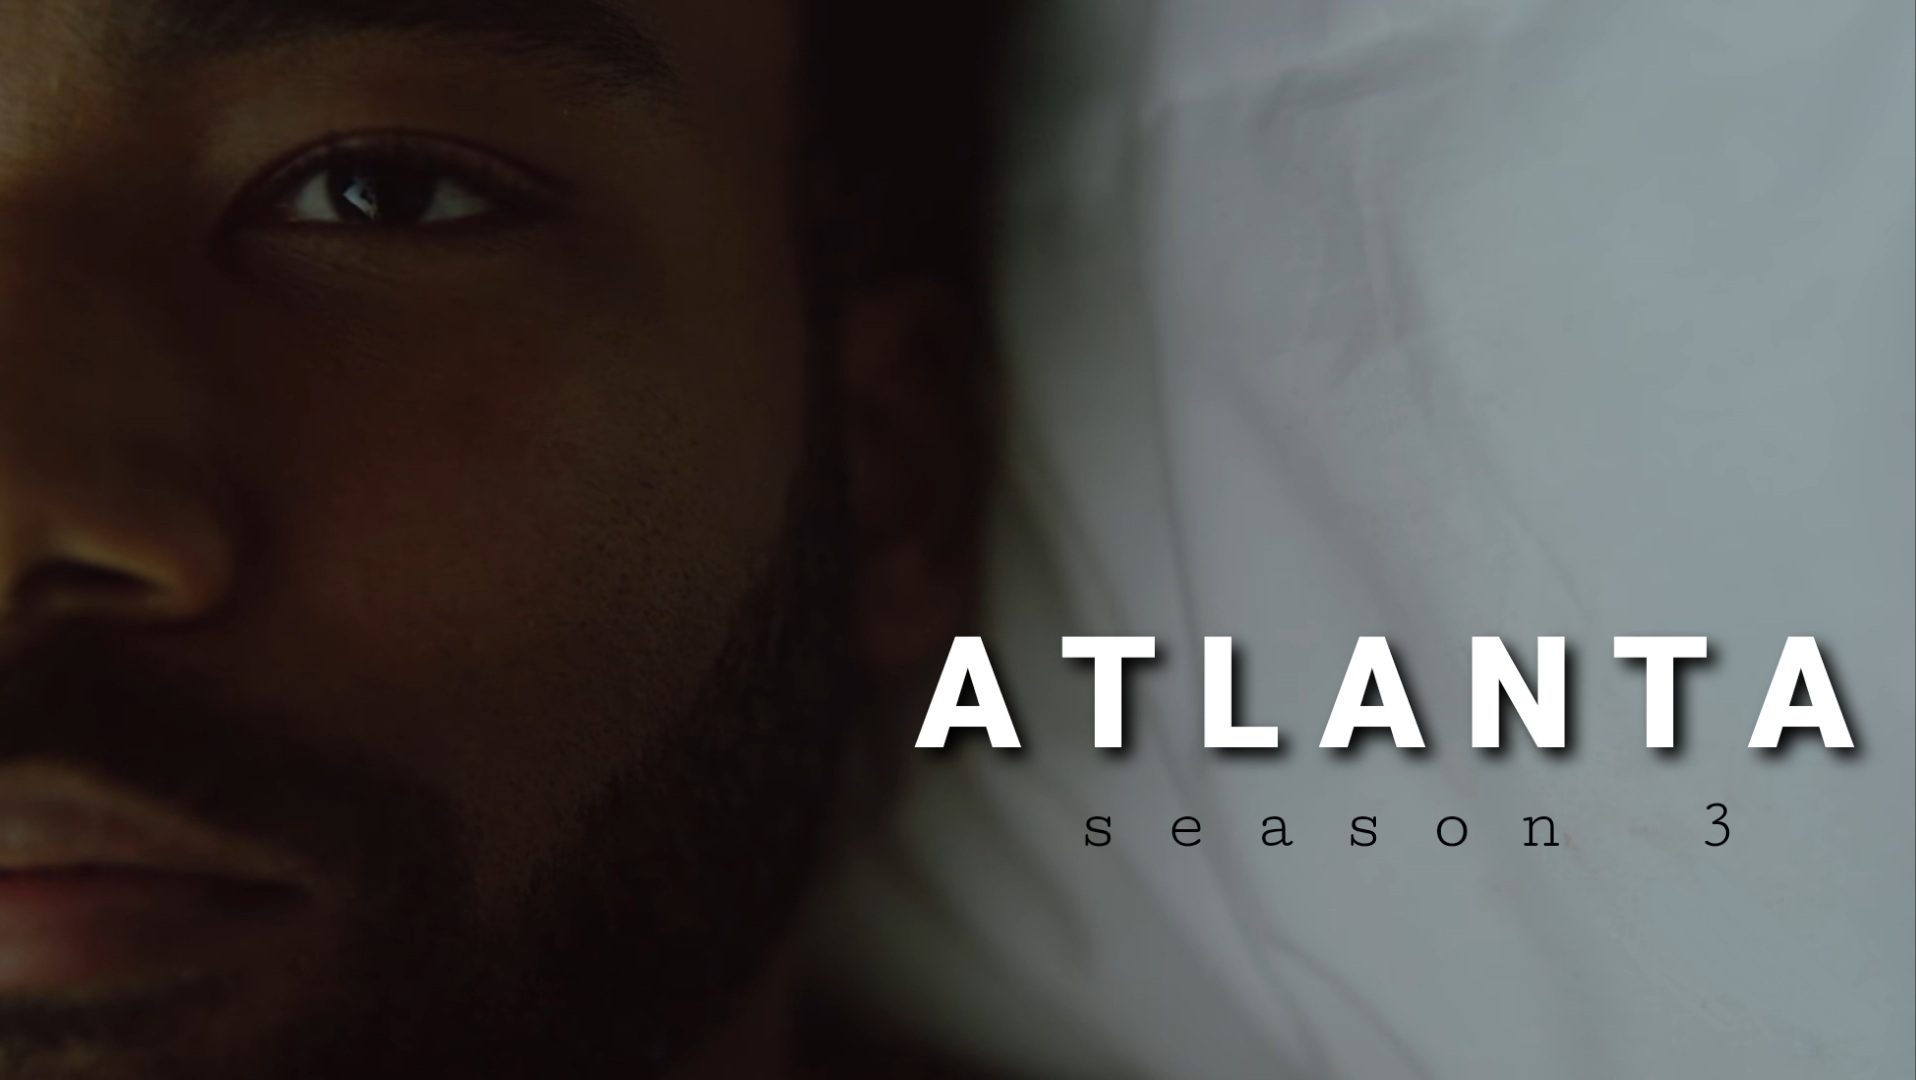 Atlanta season 3 episode 1 release time